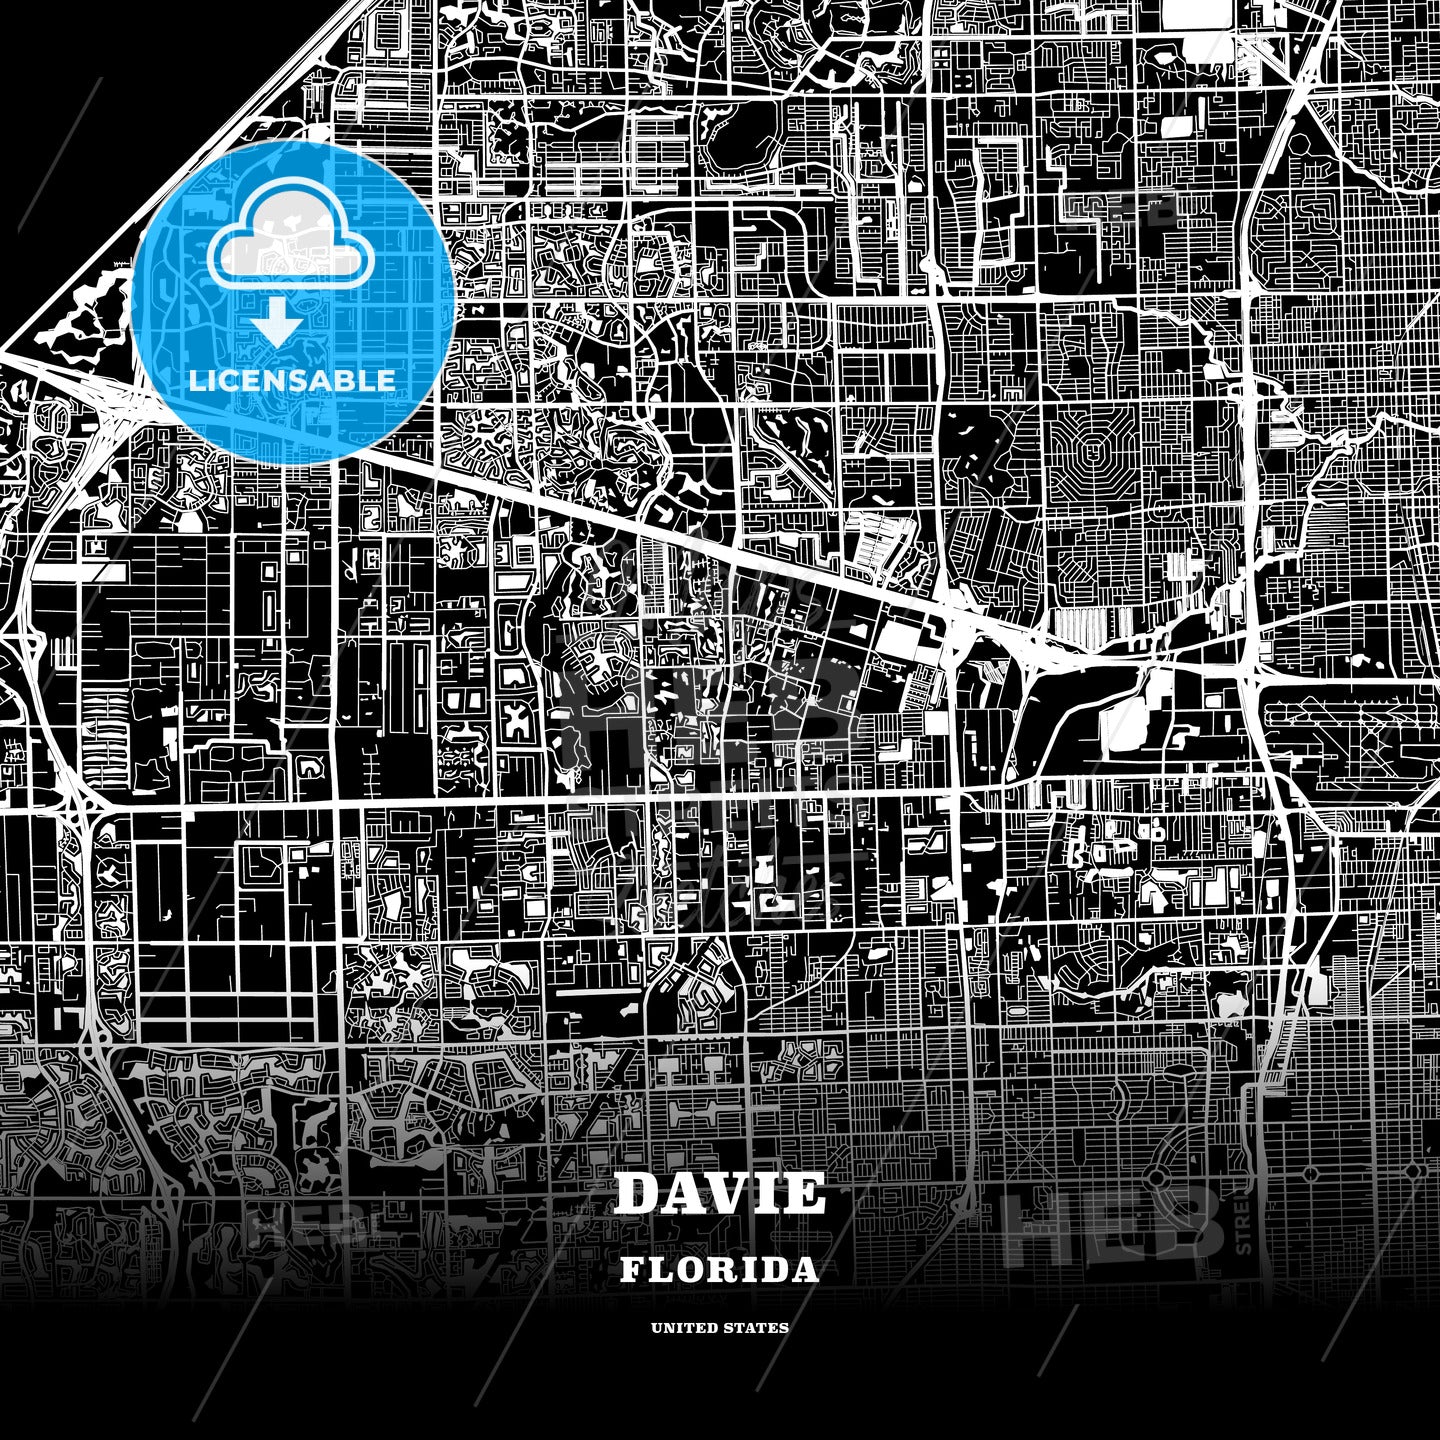 Davie, Florida, USA map